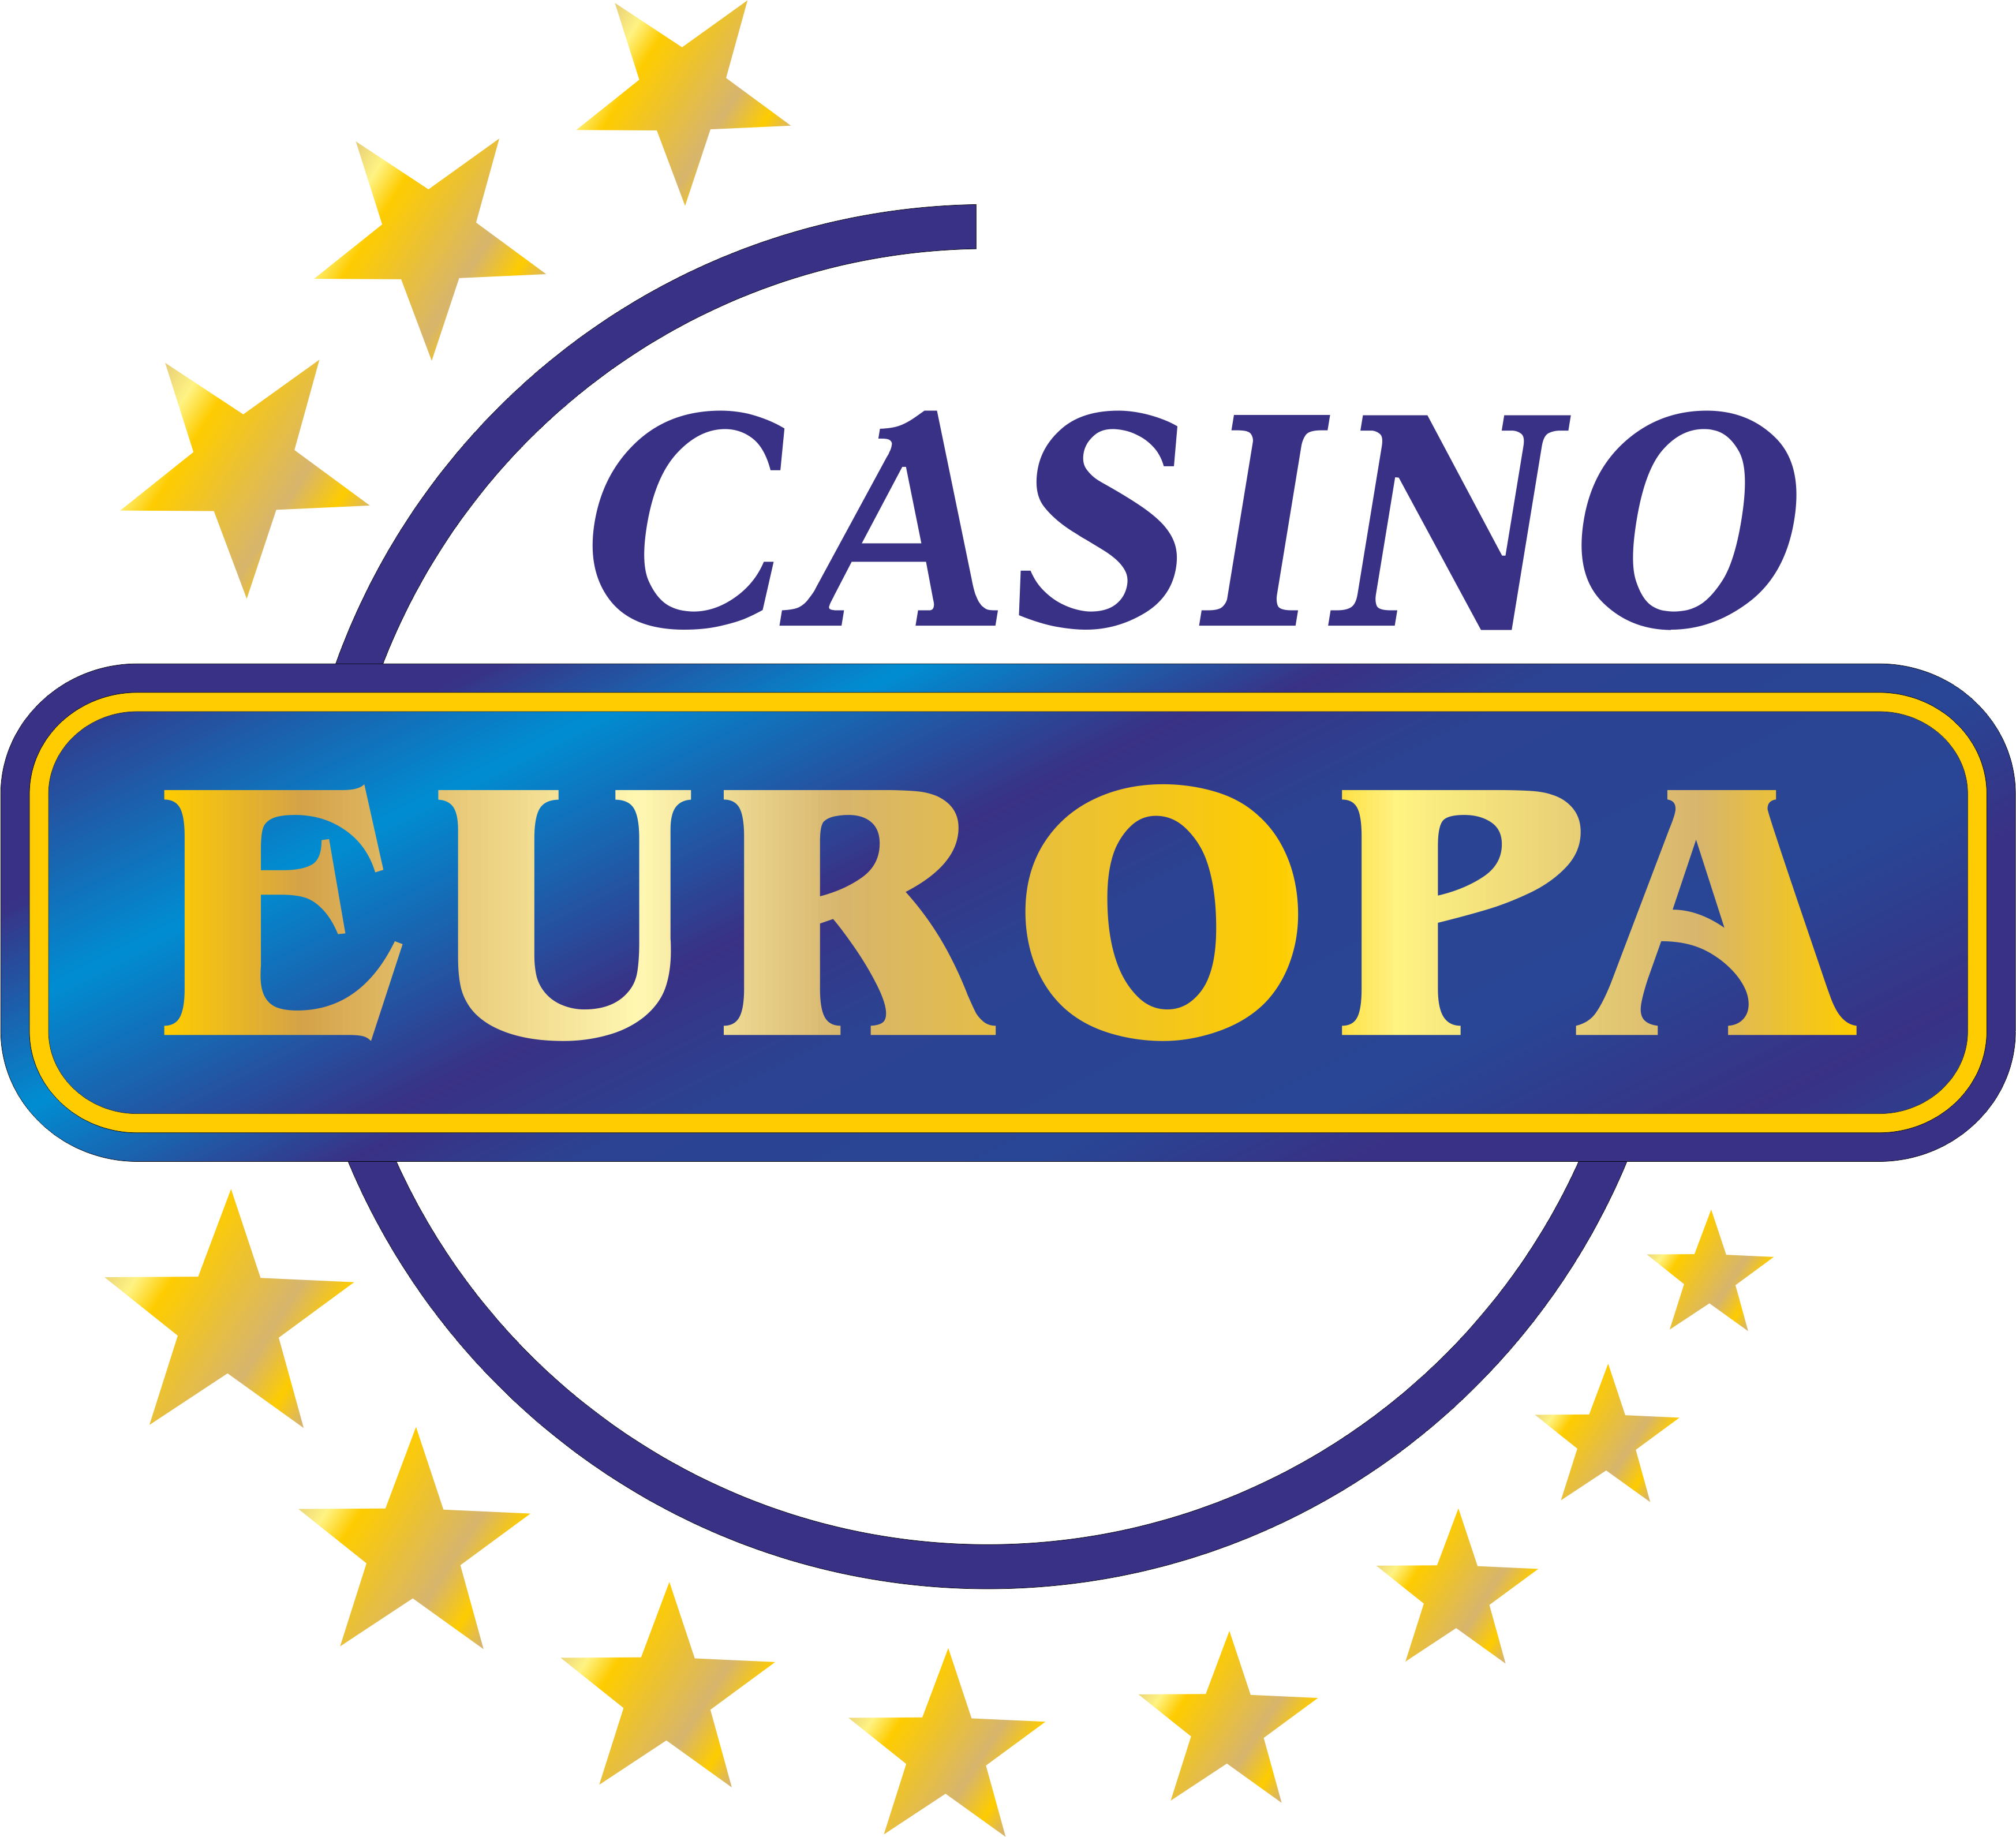 Europa ru. Казино в Европе. Казино Европа Europa Casino. Логотип казино. Эмблема казино Европа.